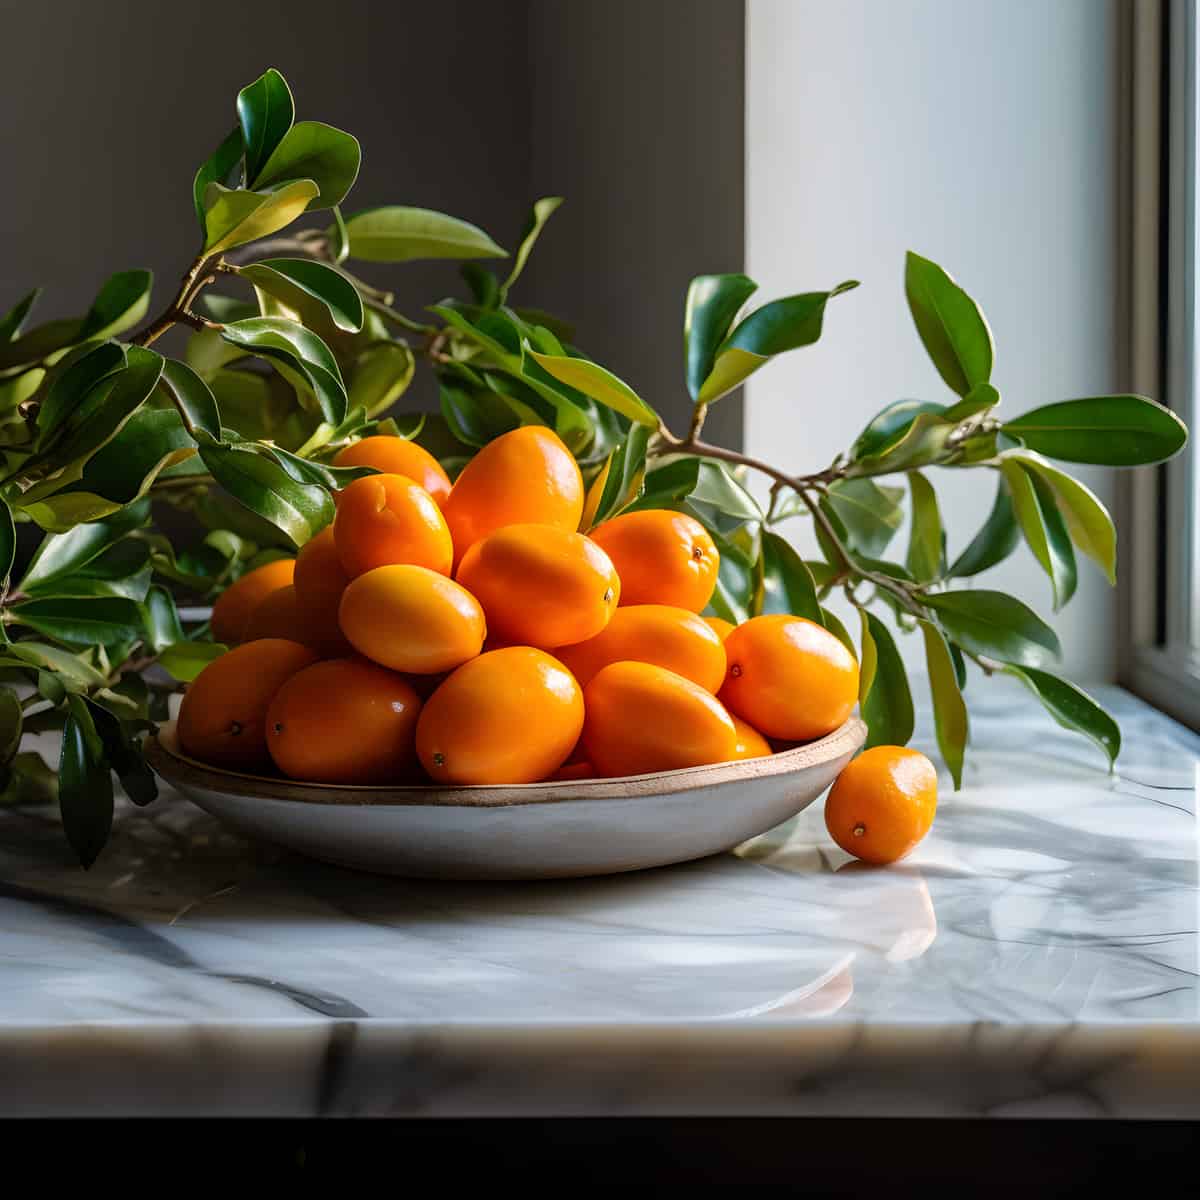 Oval Kumquat on a kitchen counter